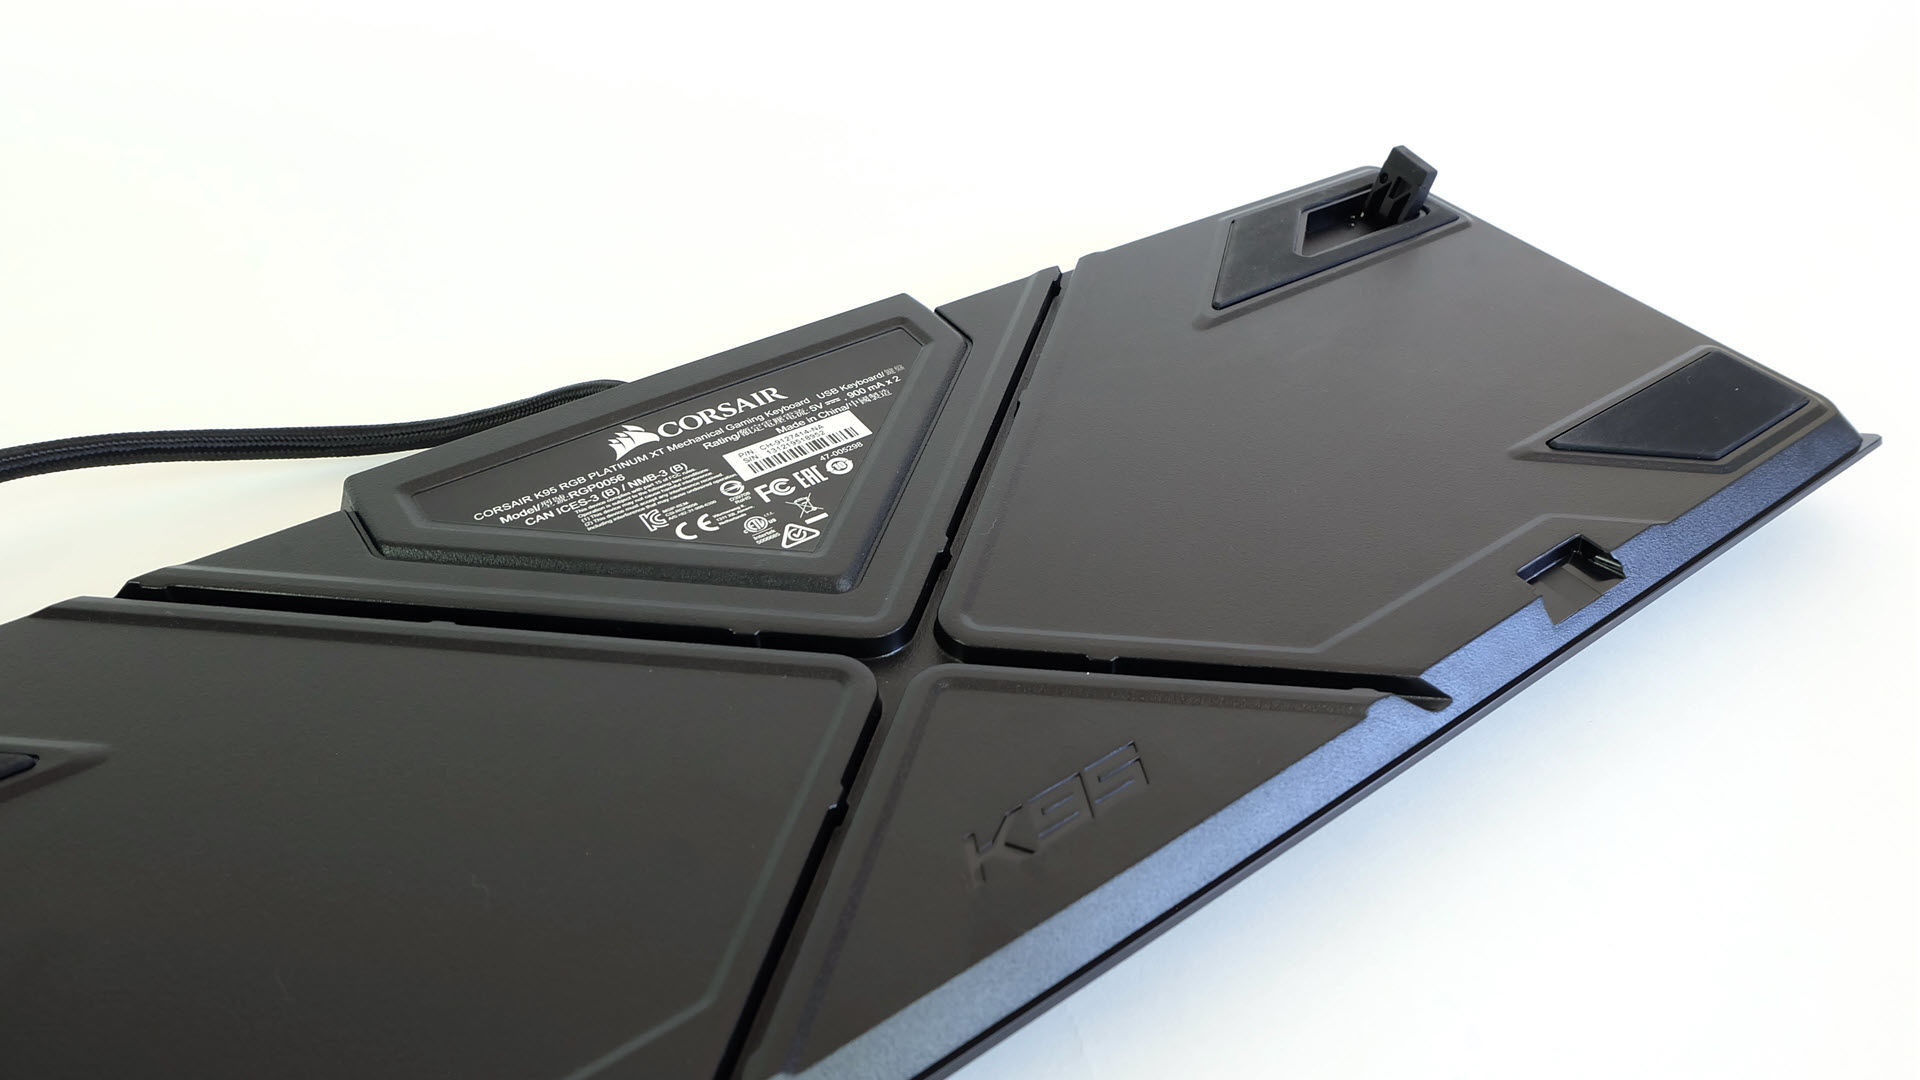 Corsair K95 Rgb Platinum Xt Mechanical Gaming Keyboard Review K95 Rgb Platinum Xt Mechanical Gaming Keyboard